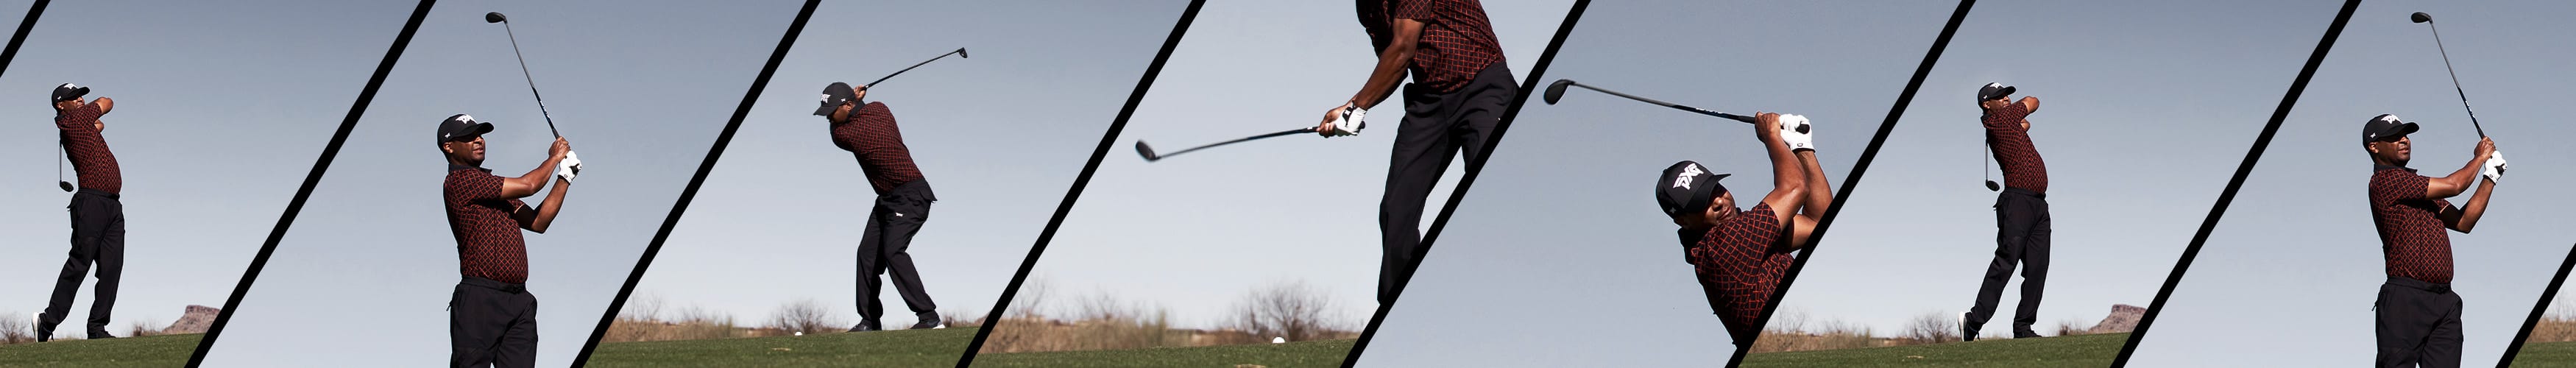 Various poses of man playing golf